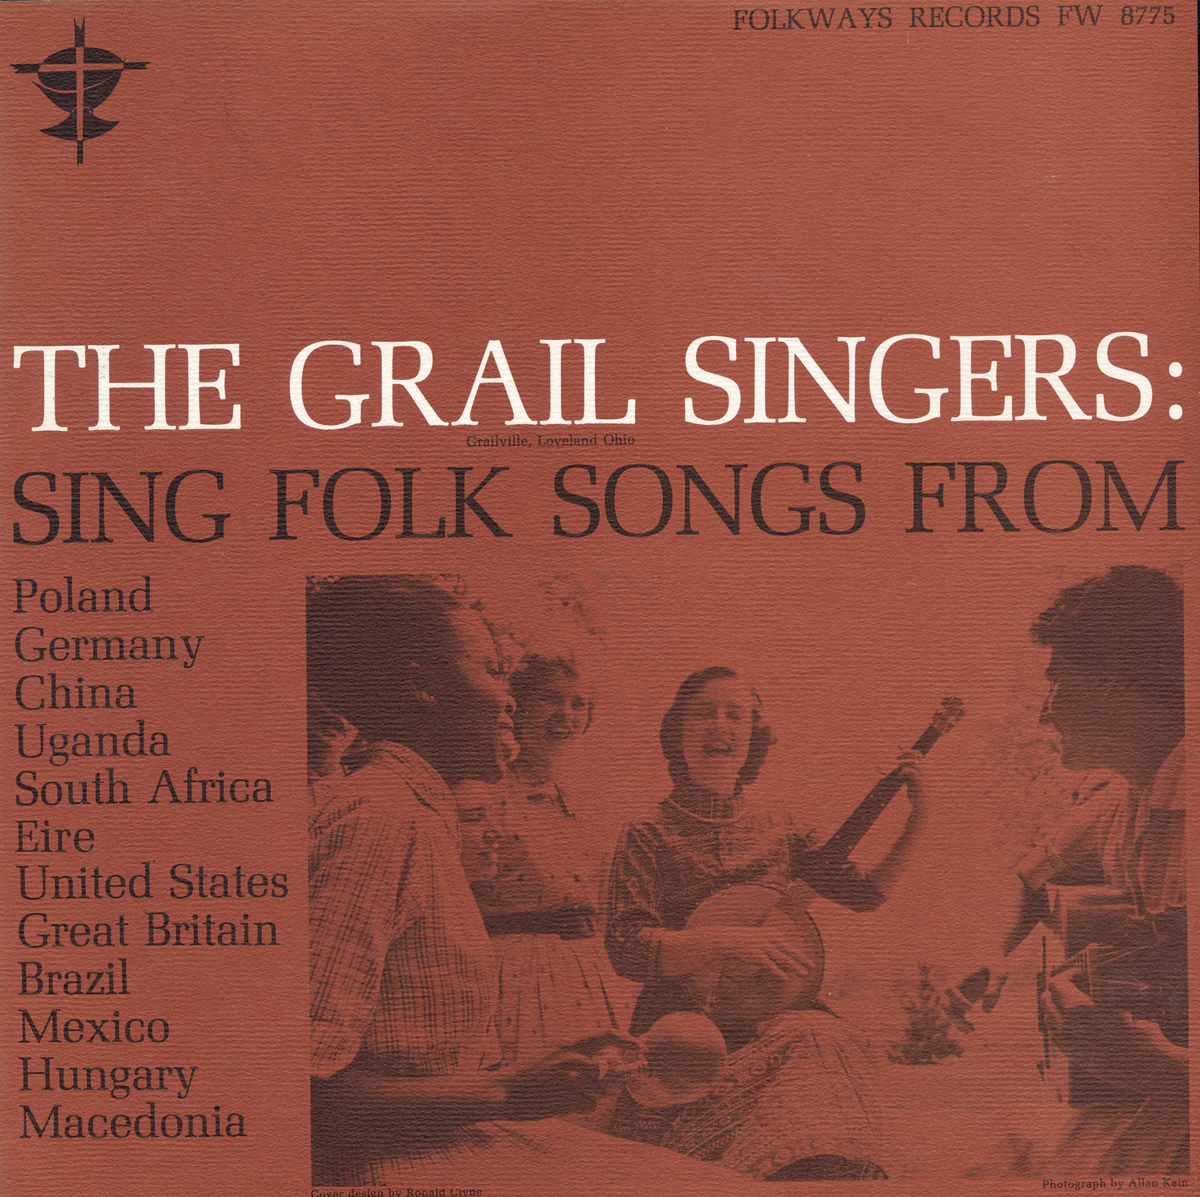 THE GRAIL SINGERS SING FOLK SONGS FROM